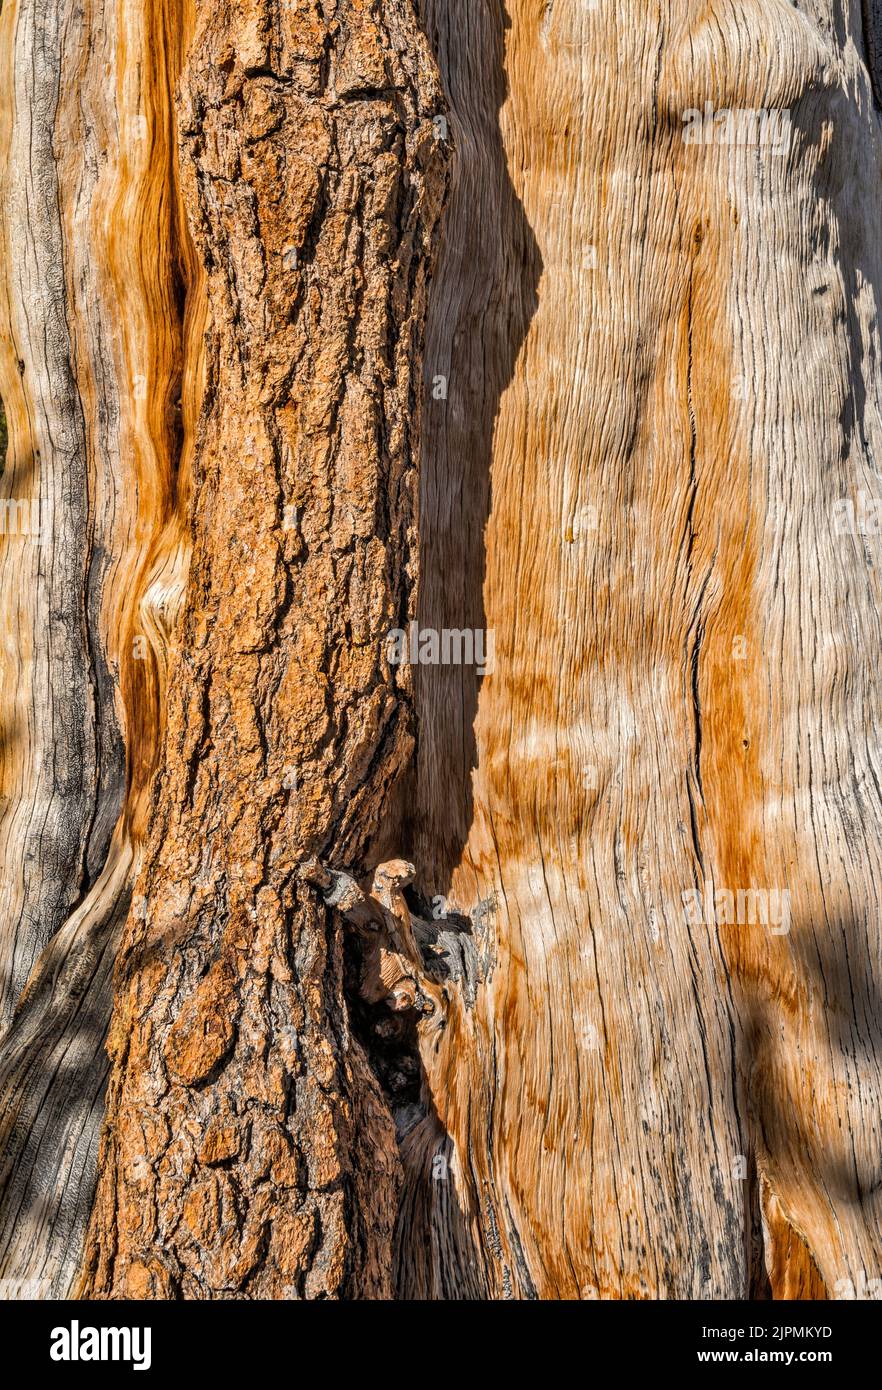 Trunk of bristlecone pine, Pinus longaeva, Great Basin National Park, Nevada, USA Stock Photo